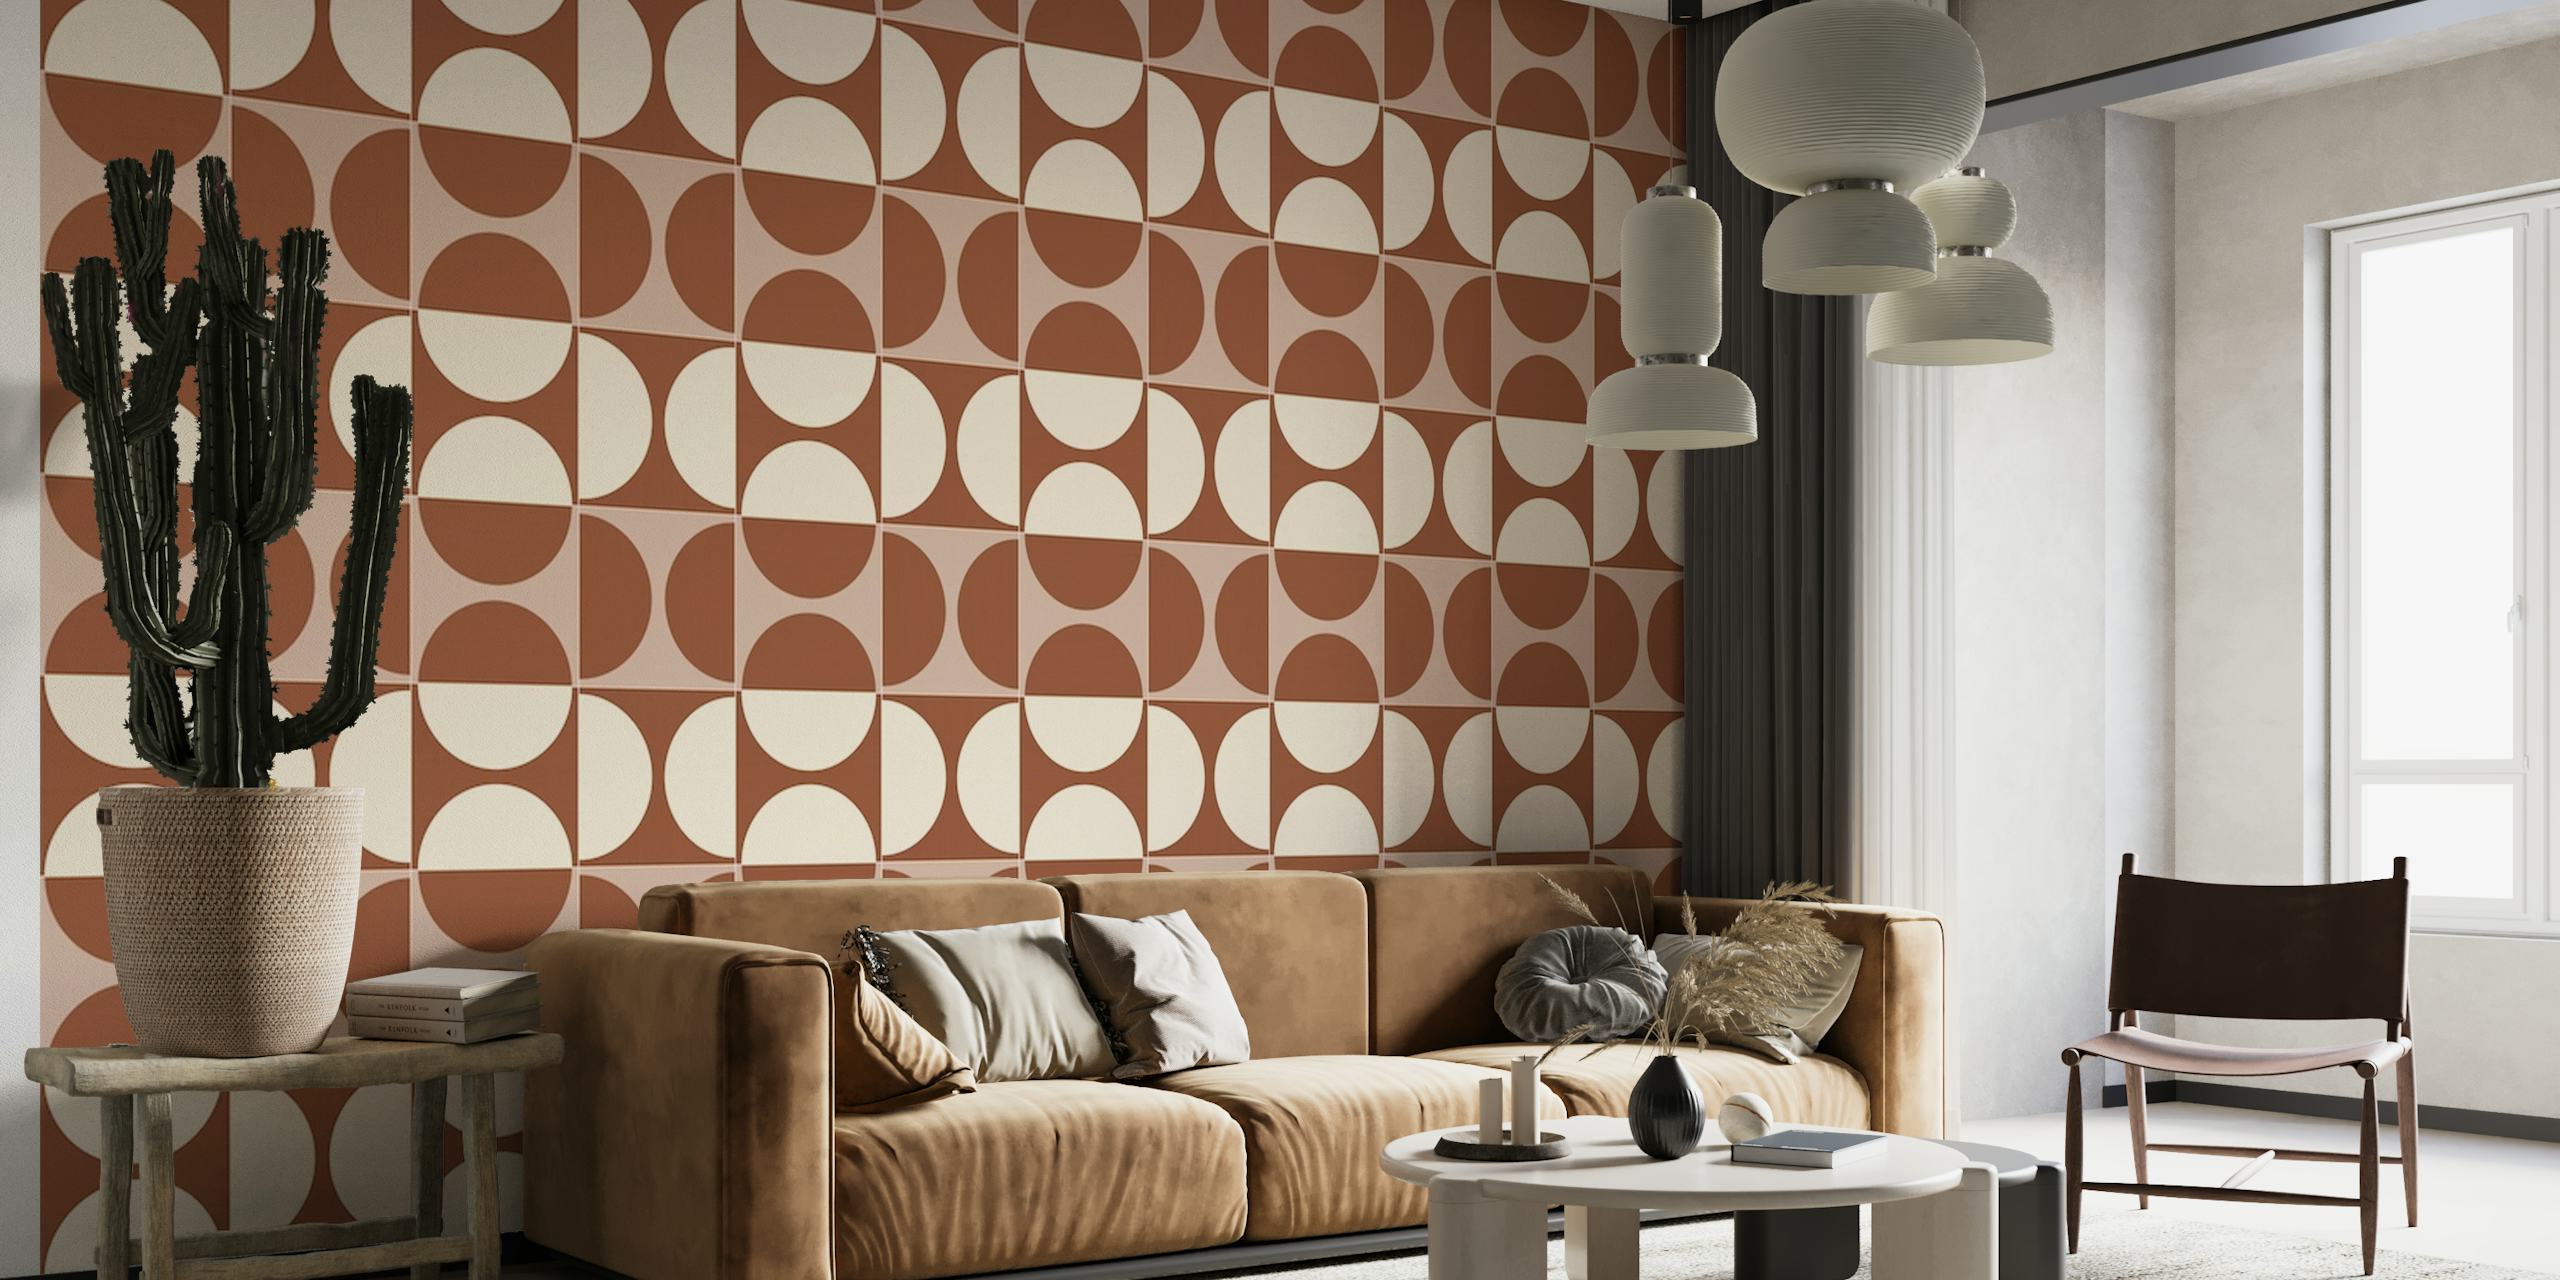 Cotto Tiles Cinnamon and Cream Combo Lines wallpaper